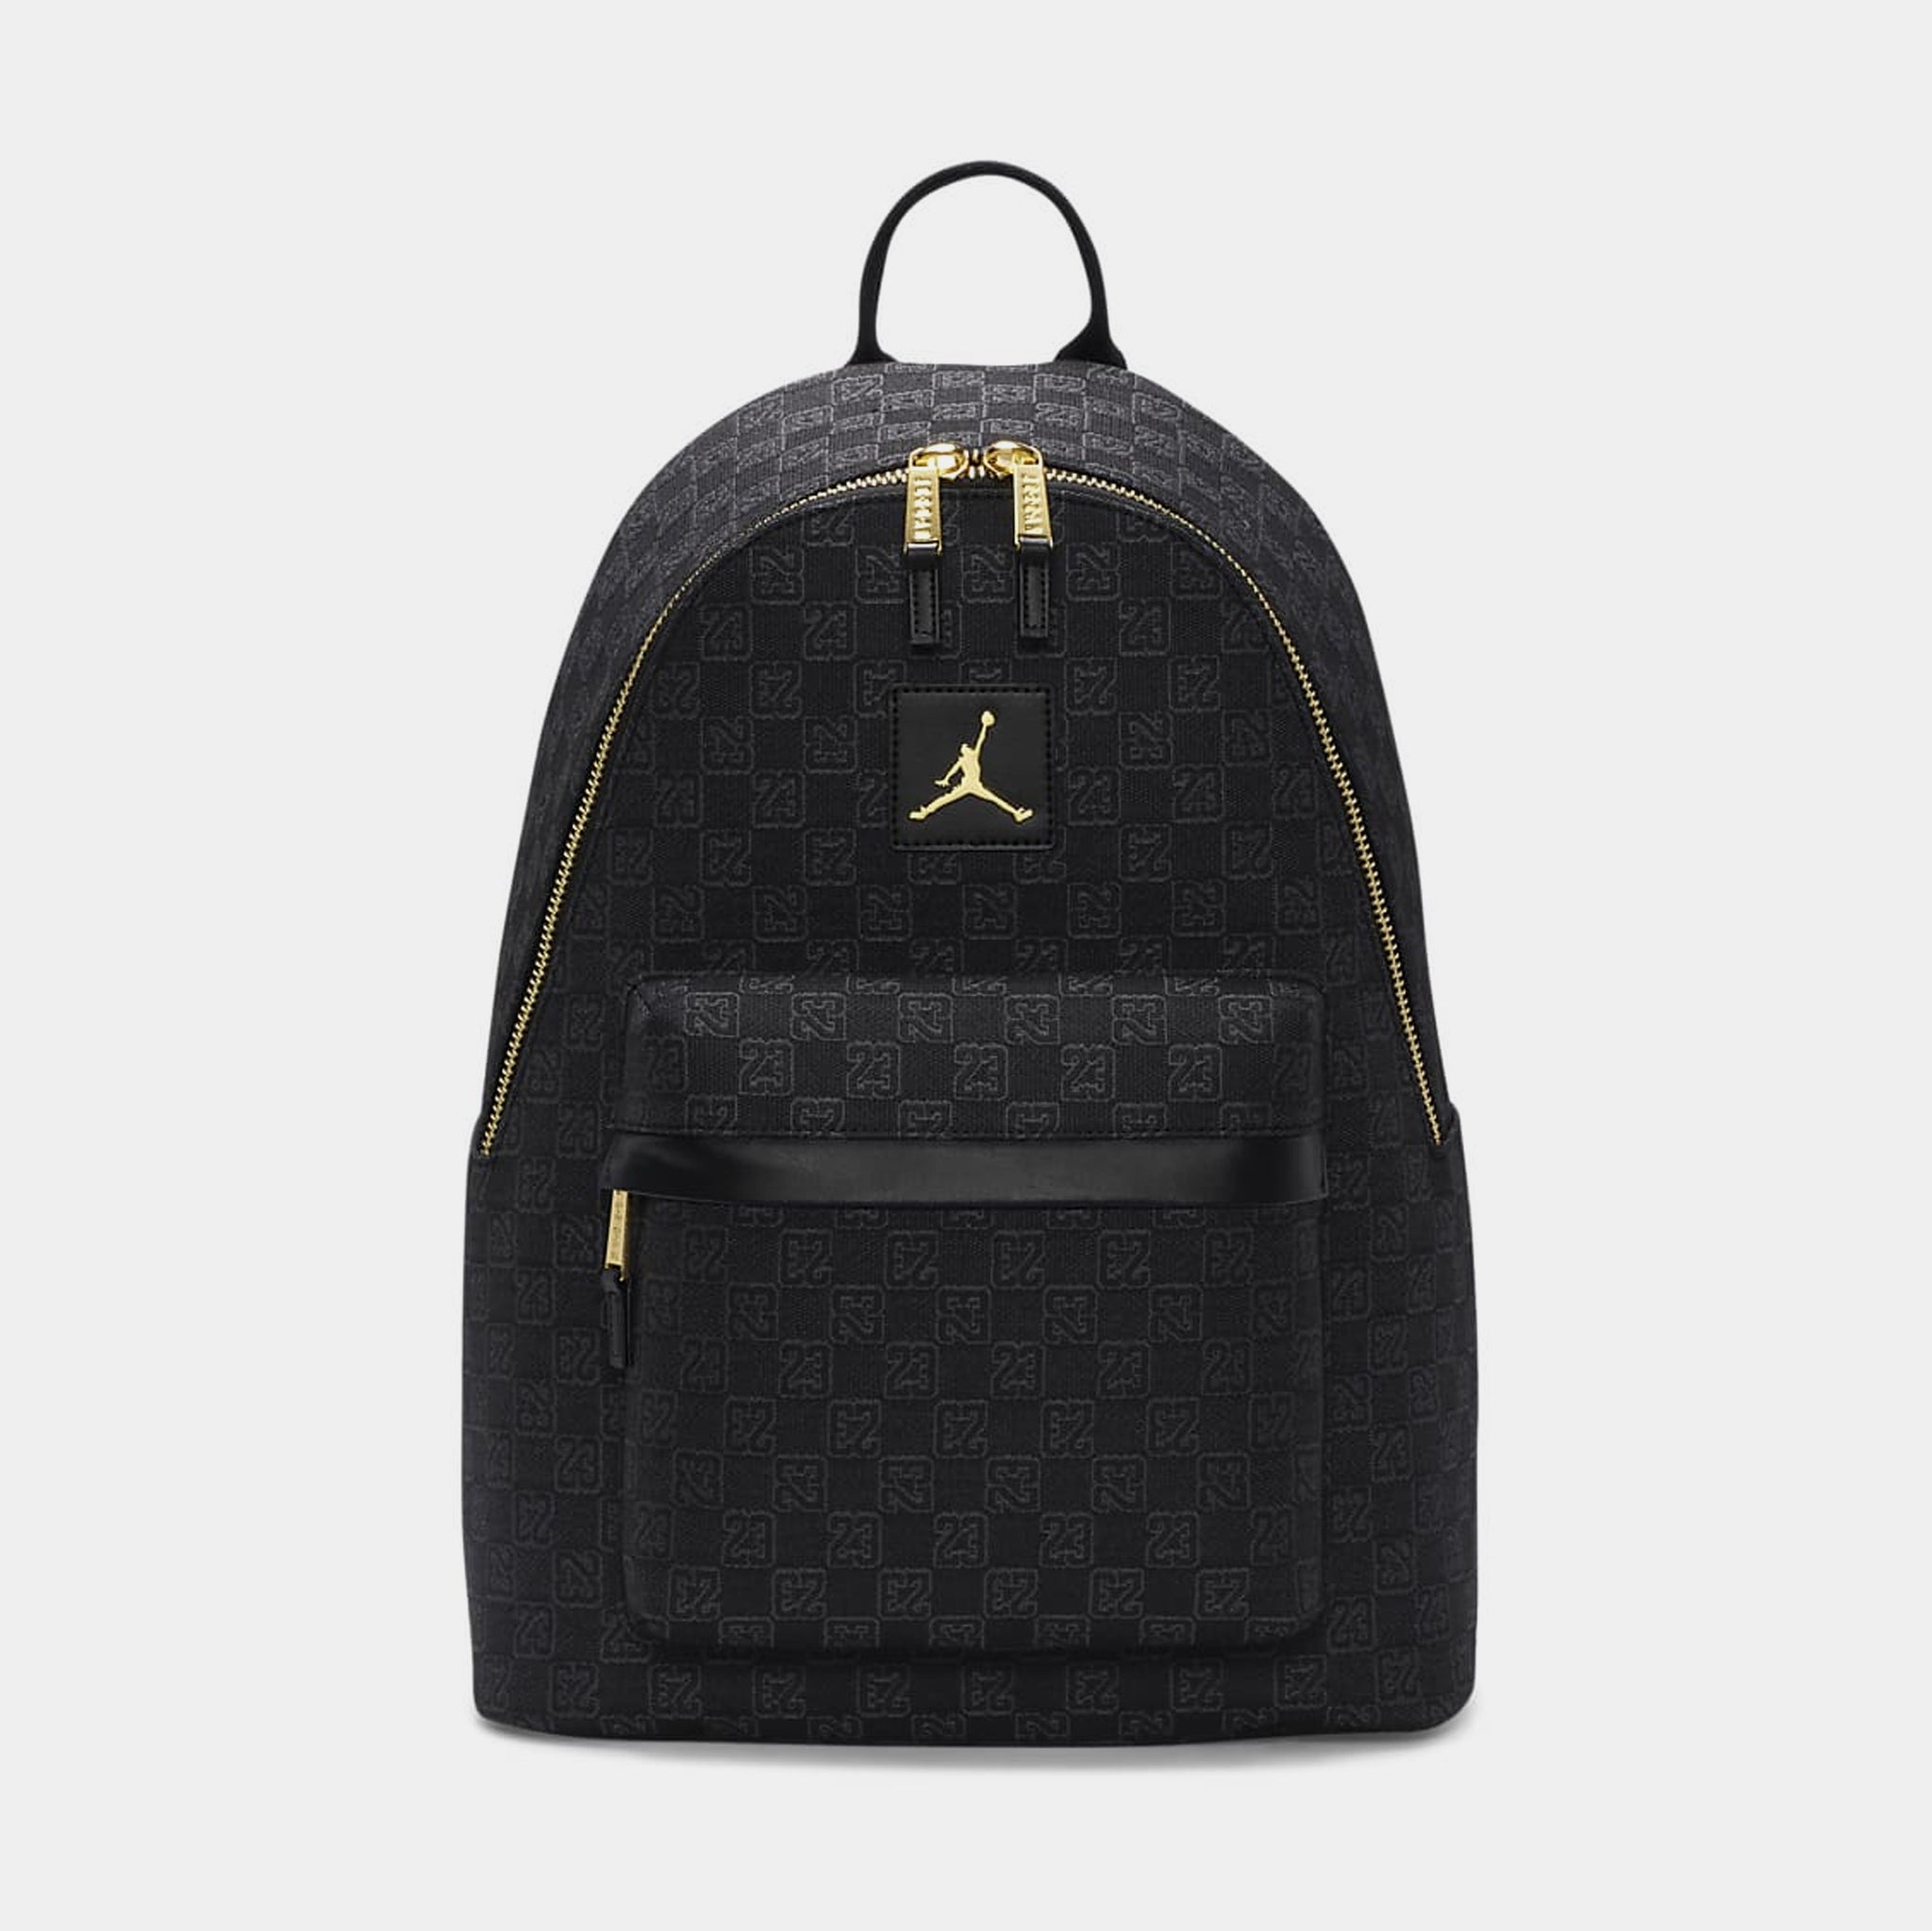 louis vuitton backpack black monogram